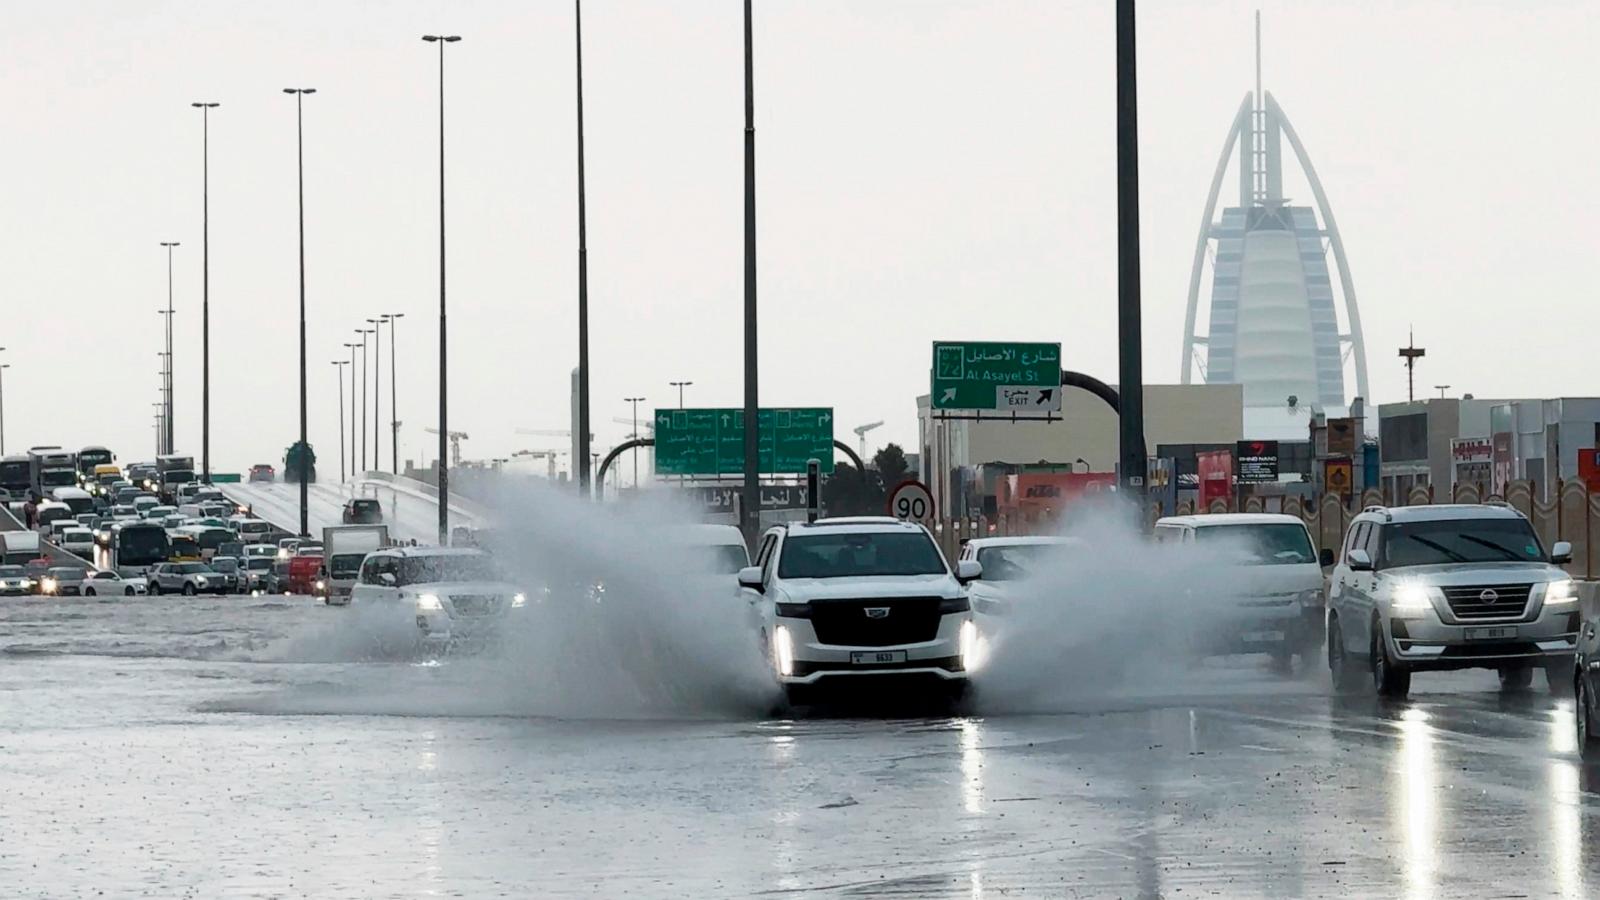 Dubai on Red Alert: Understanding the Dynamics Behind the Headlines